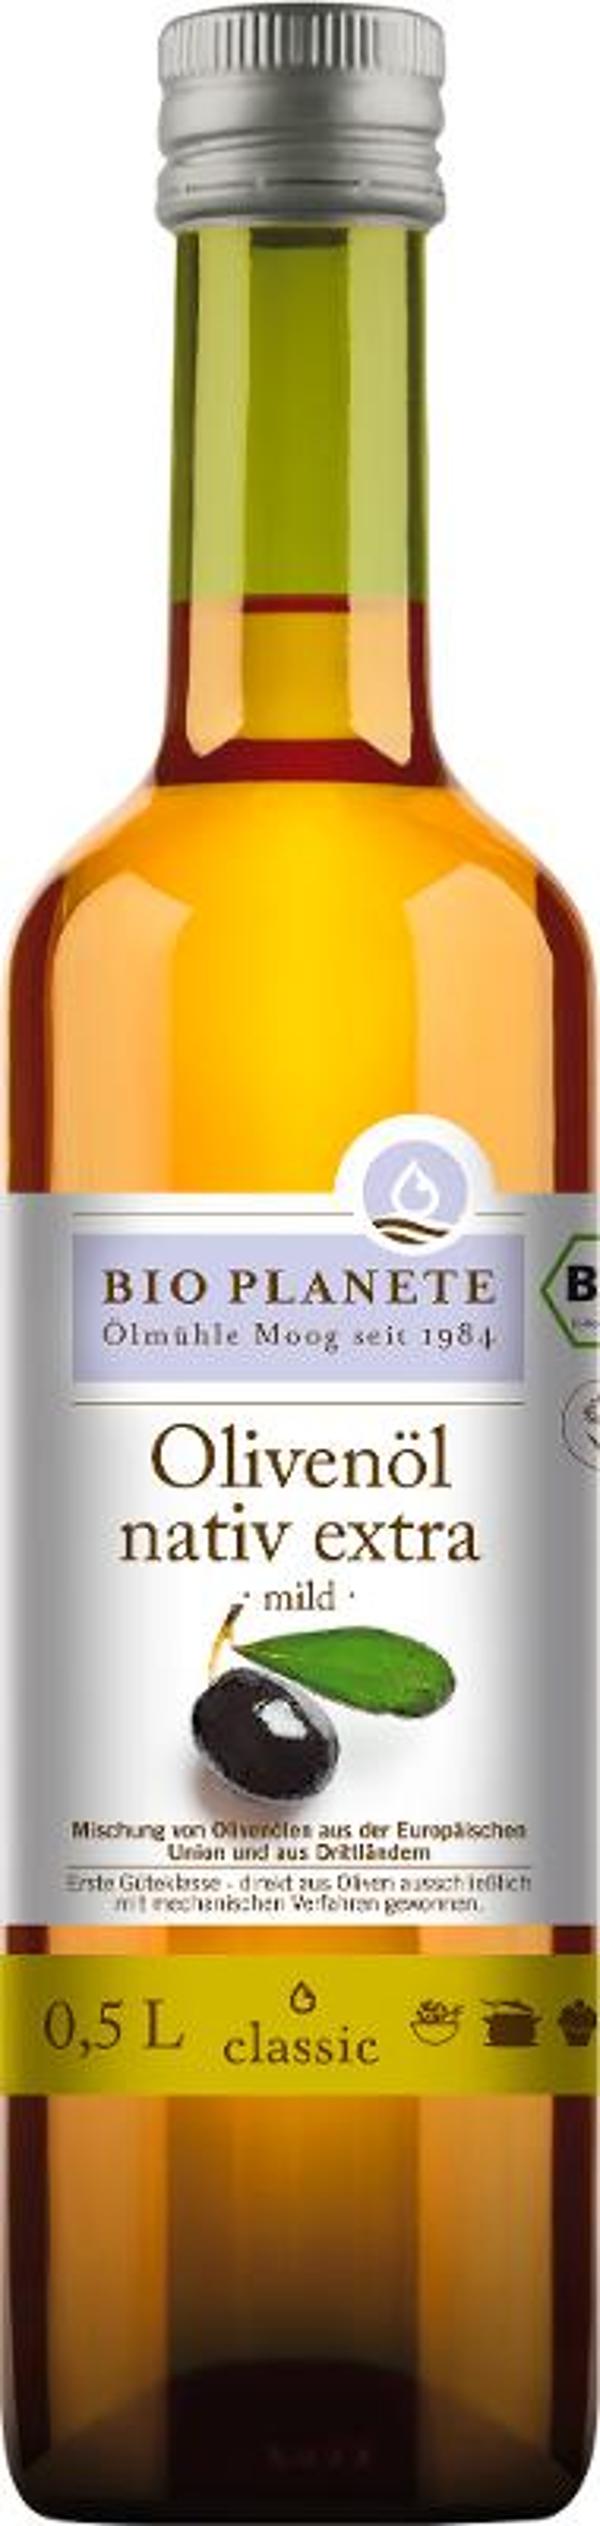 Produktfoto zu Olivenöl mild nativ extra 0,5l  Bio Planete